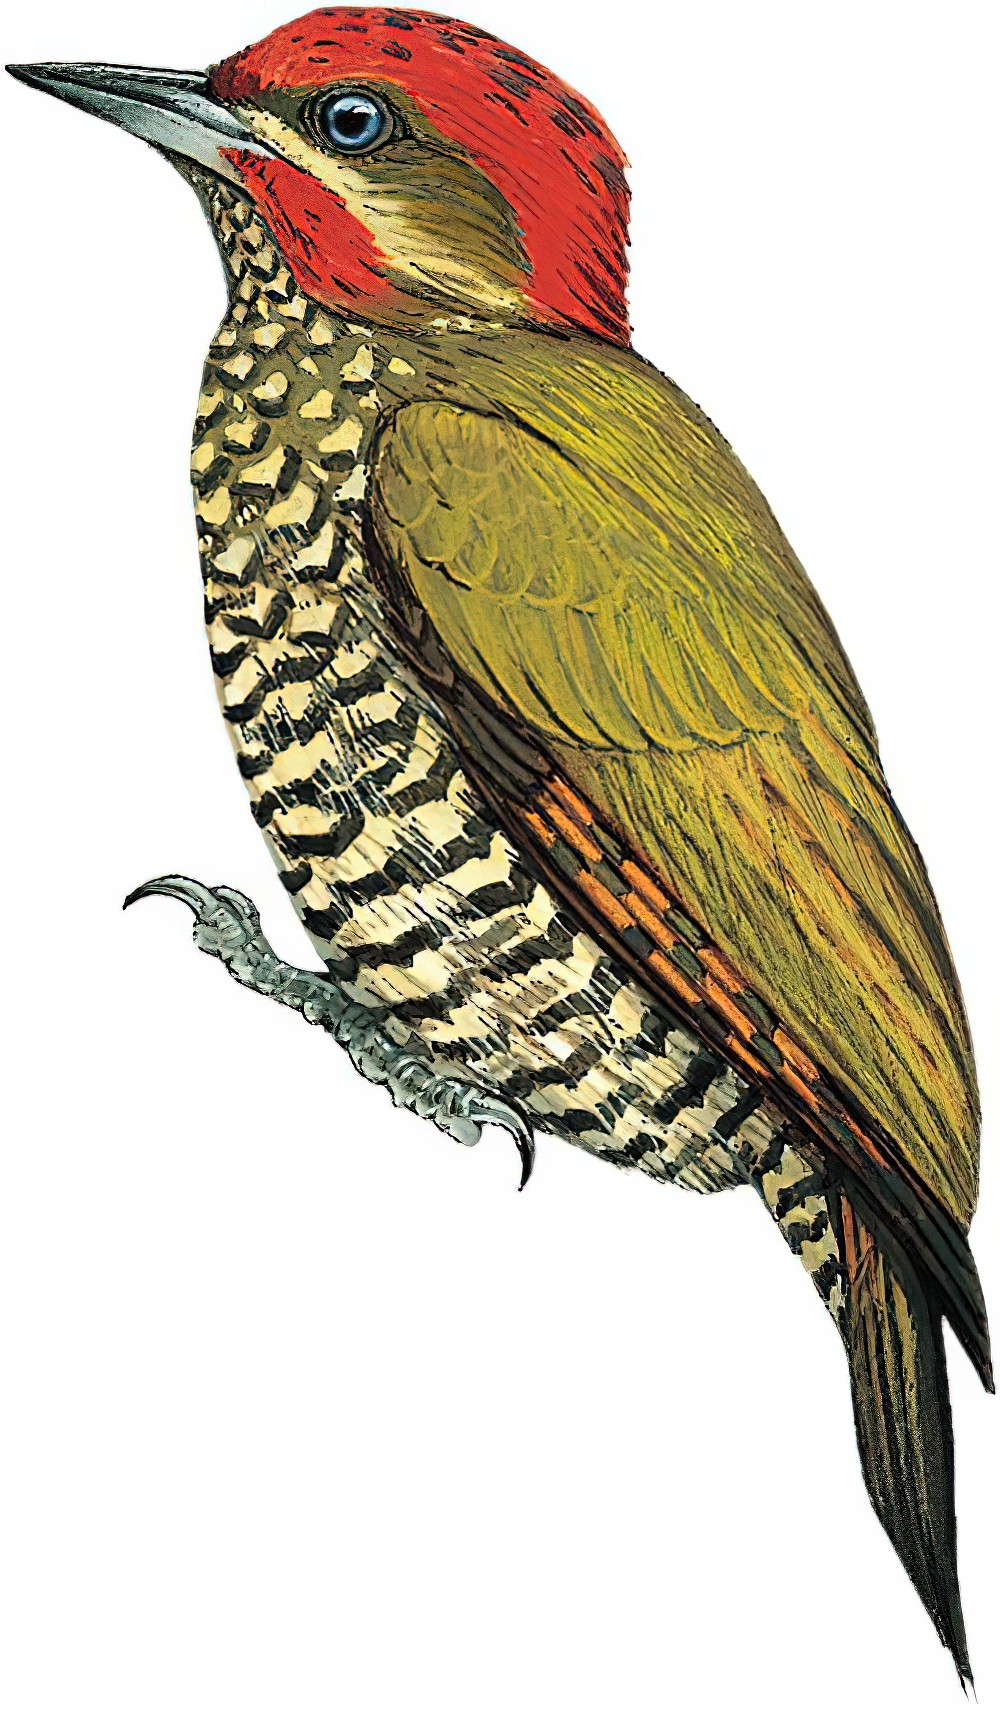 Stripe-cheeked Woodpecker / Piculus callopterus